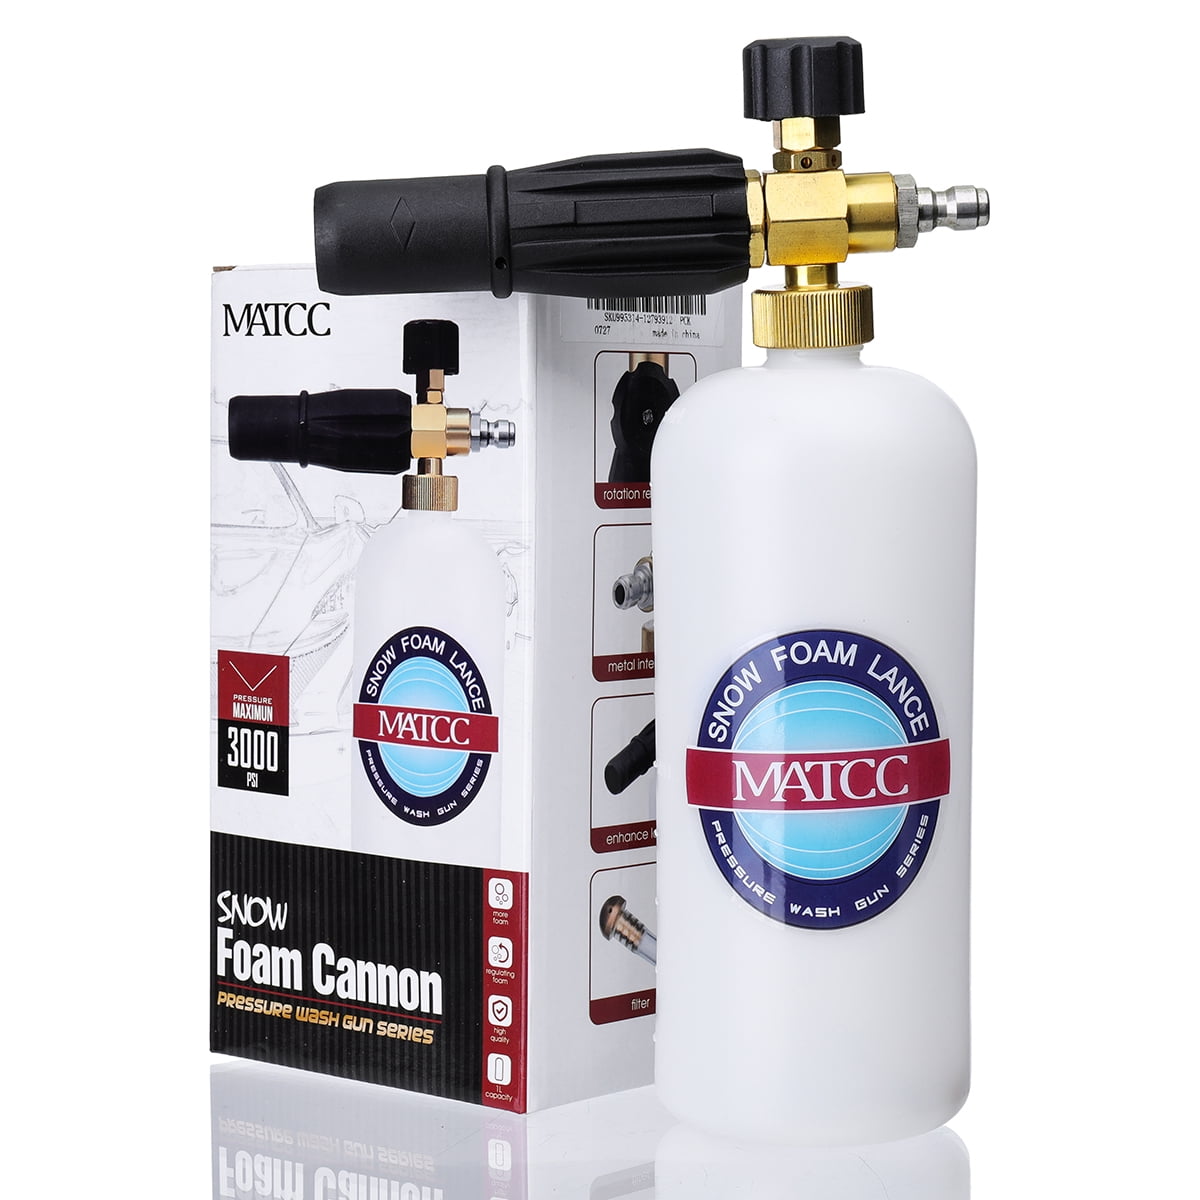 MATCC Adjustable Foam Cannon 1 Liter Bottle Snow Lance With 1/4" Quick Connector for sale online 